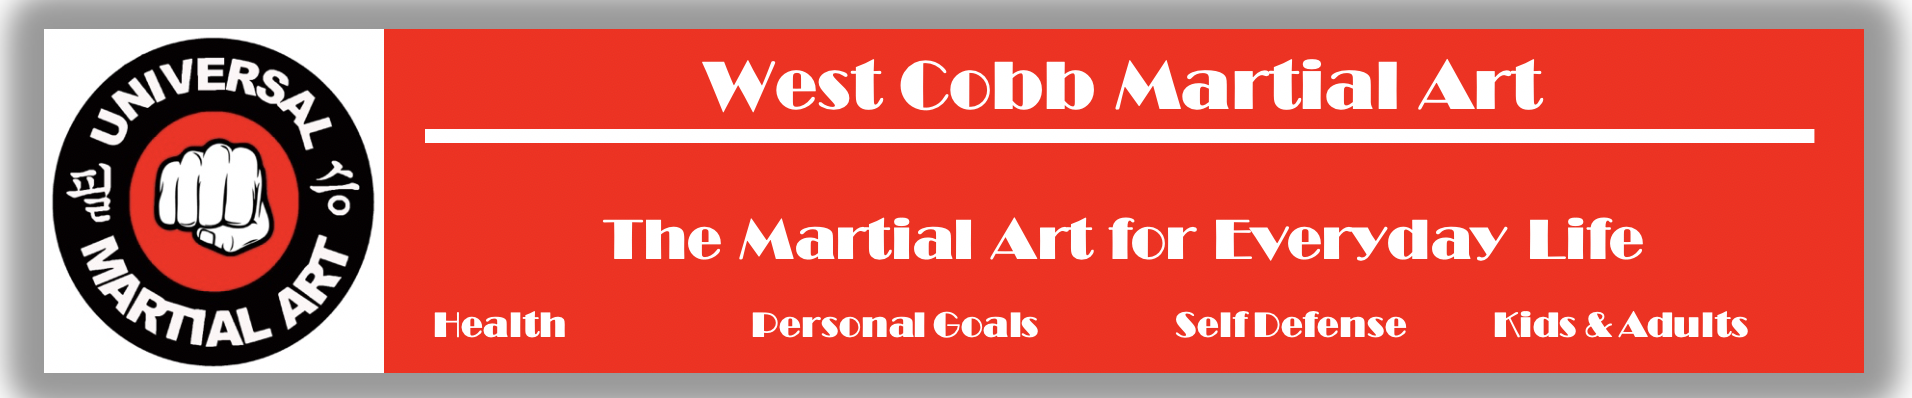 West Cobb Martial Art